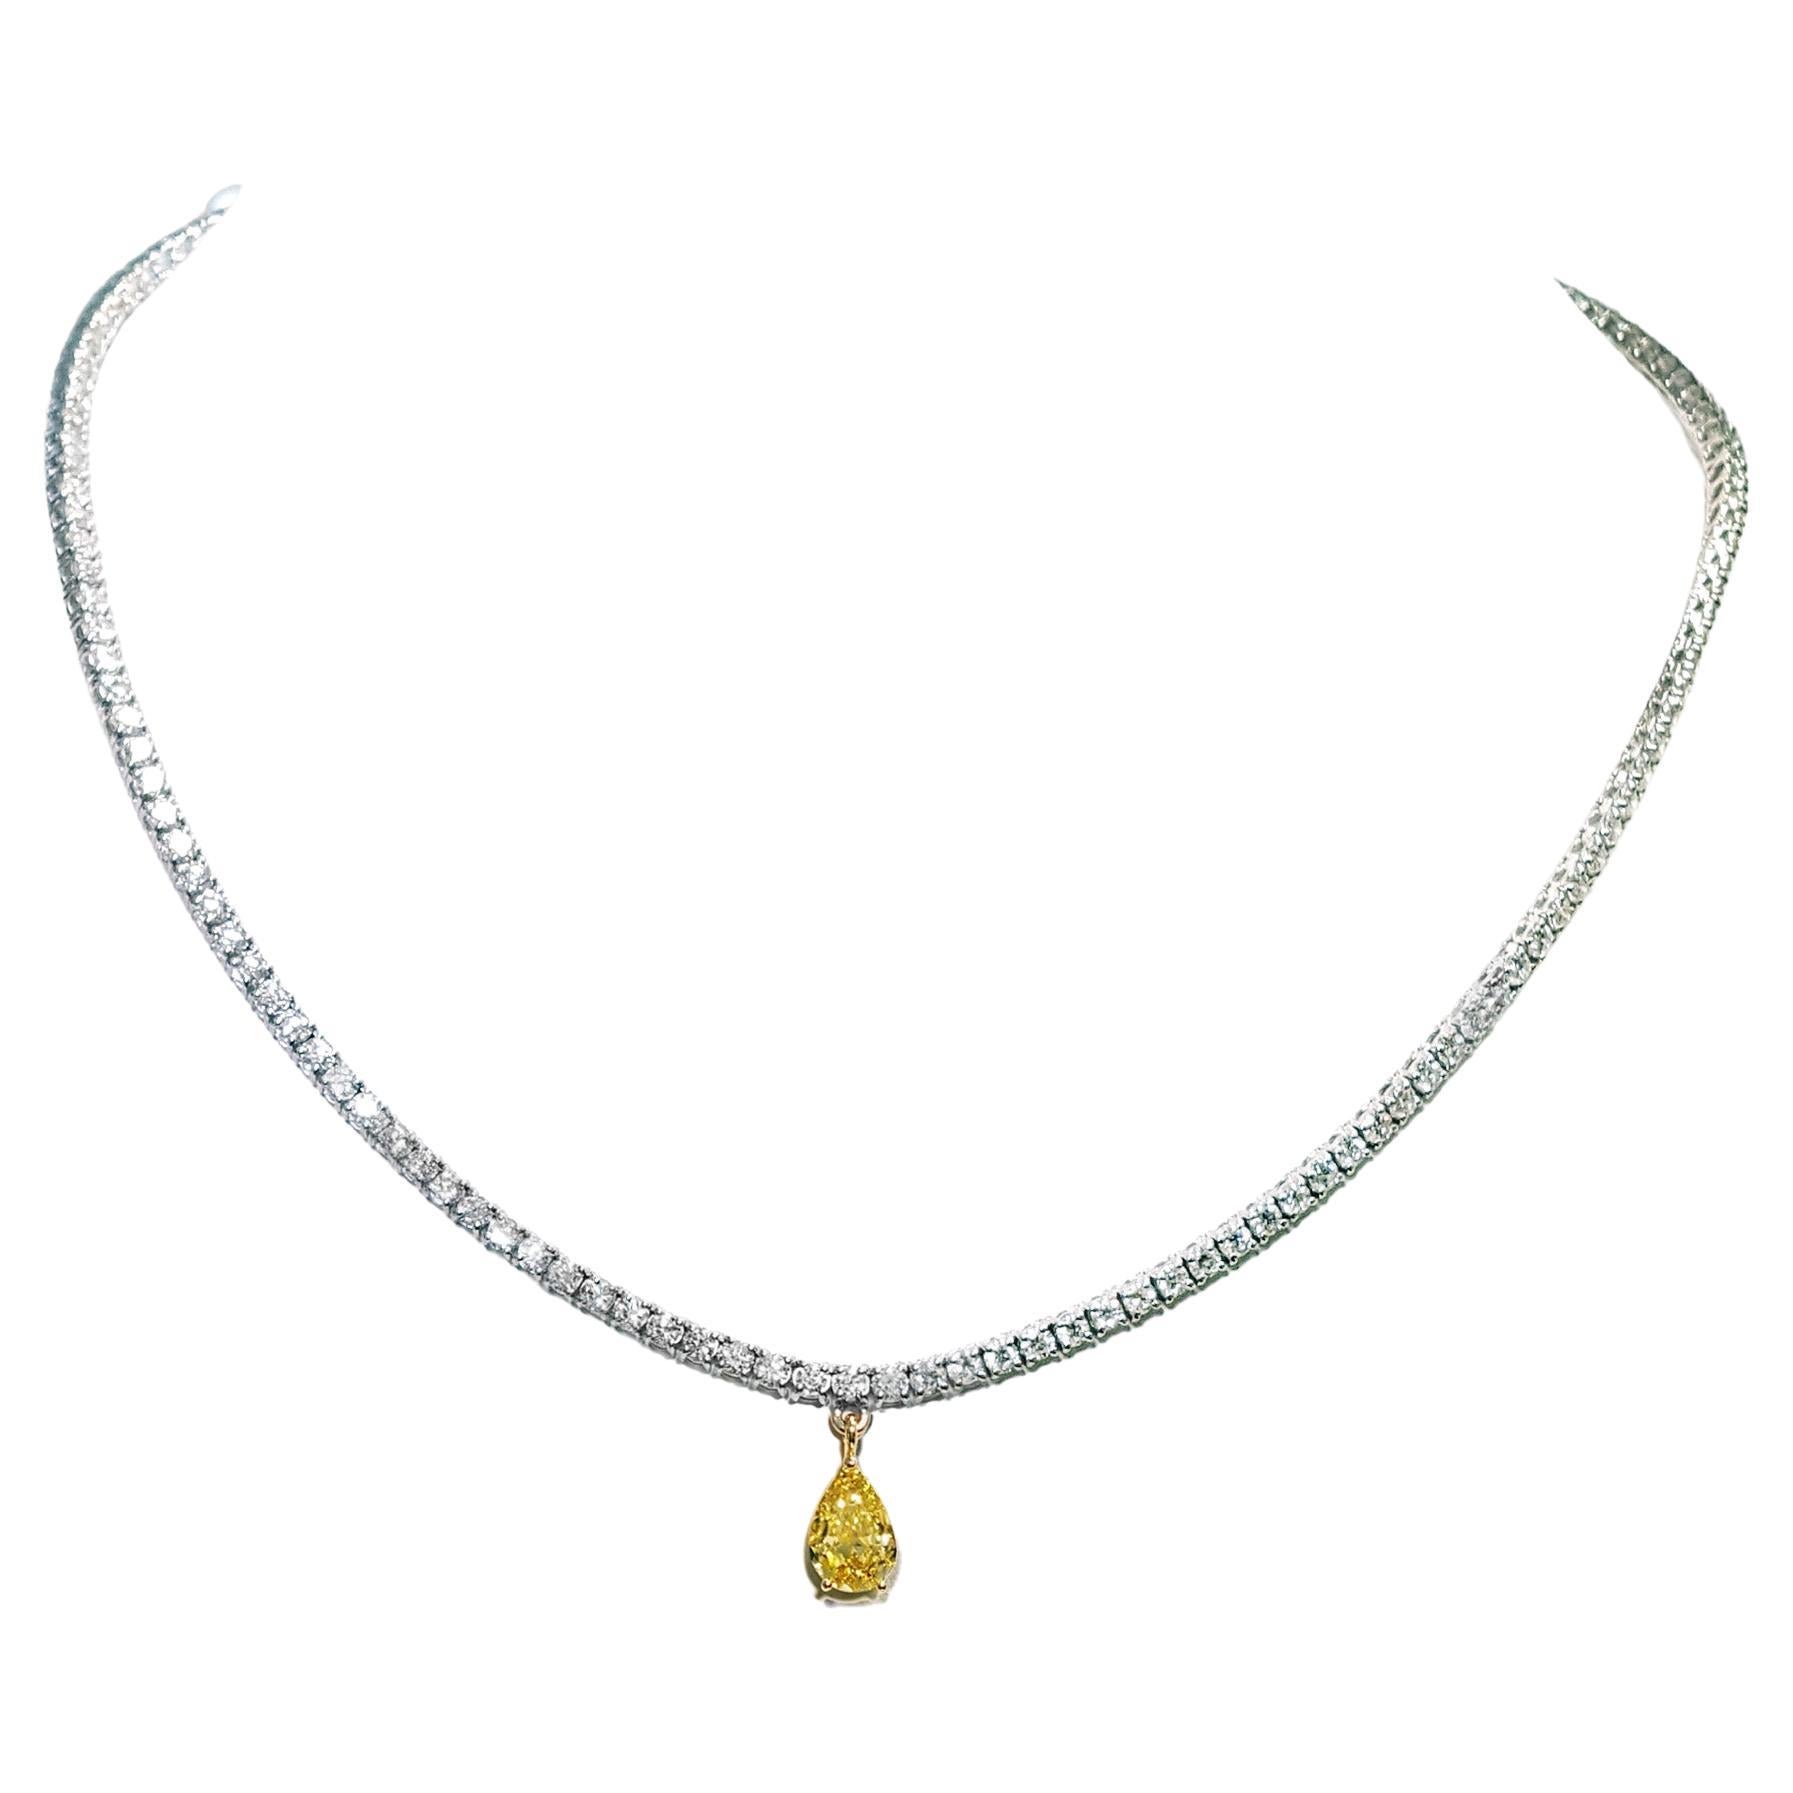 10.66 Carat Fancy Intense Yellow Pendant  & Diamond Tennis Necklace In 18k Gold.